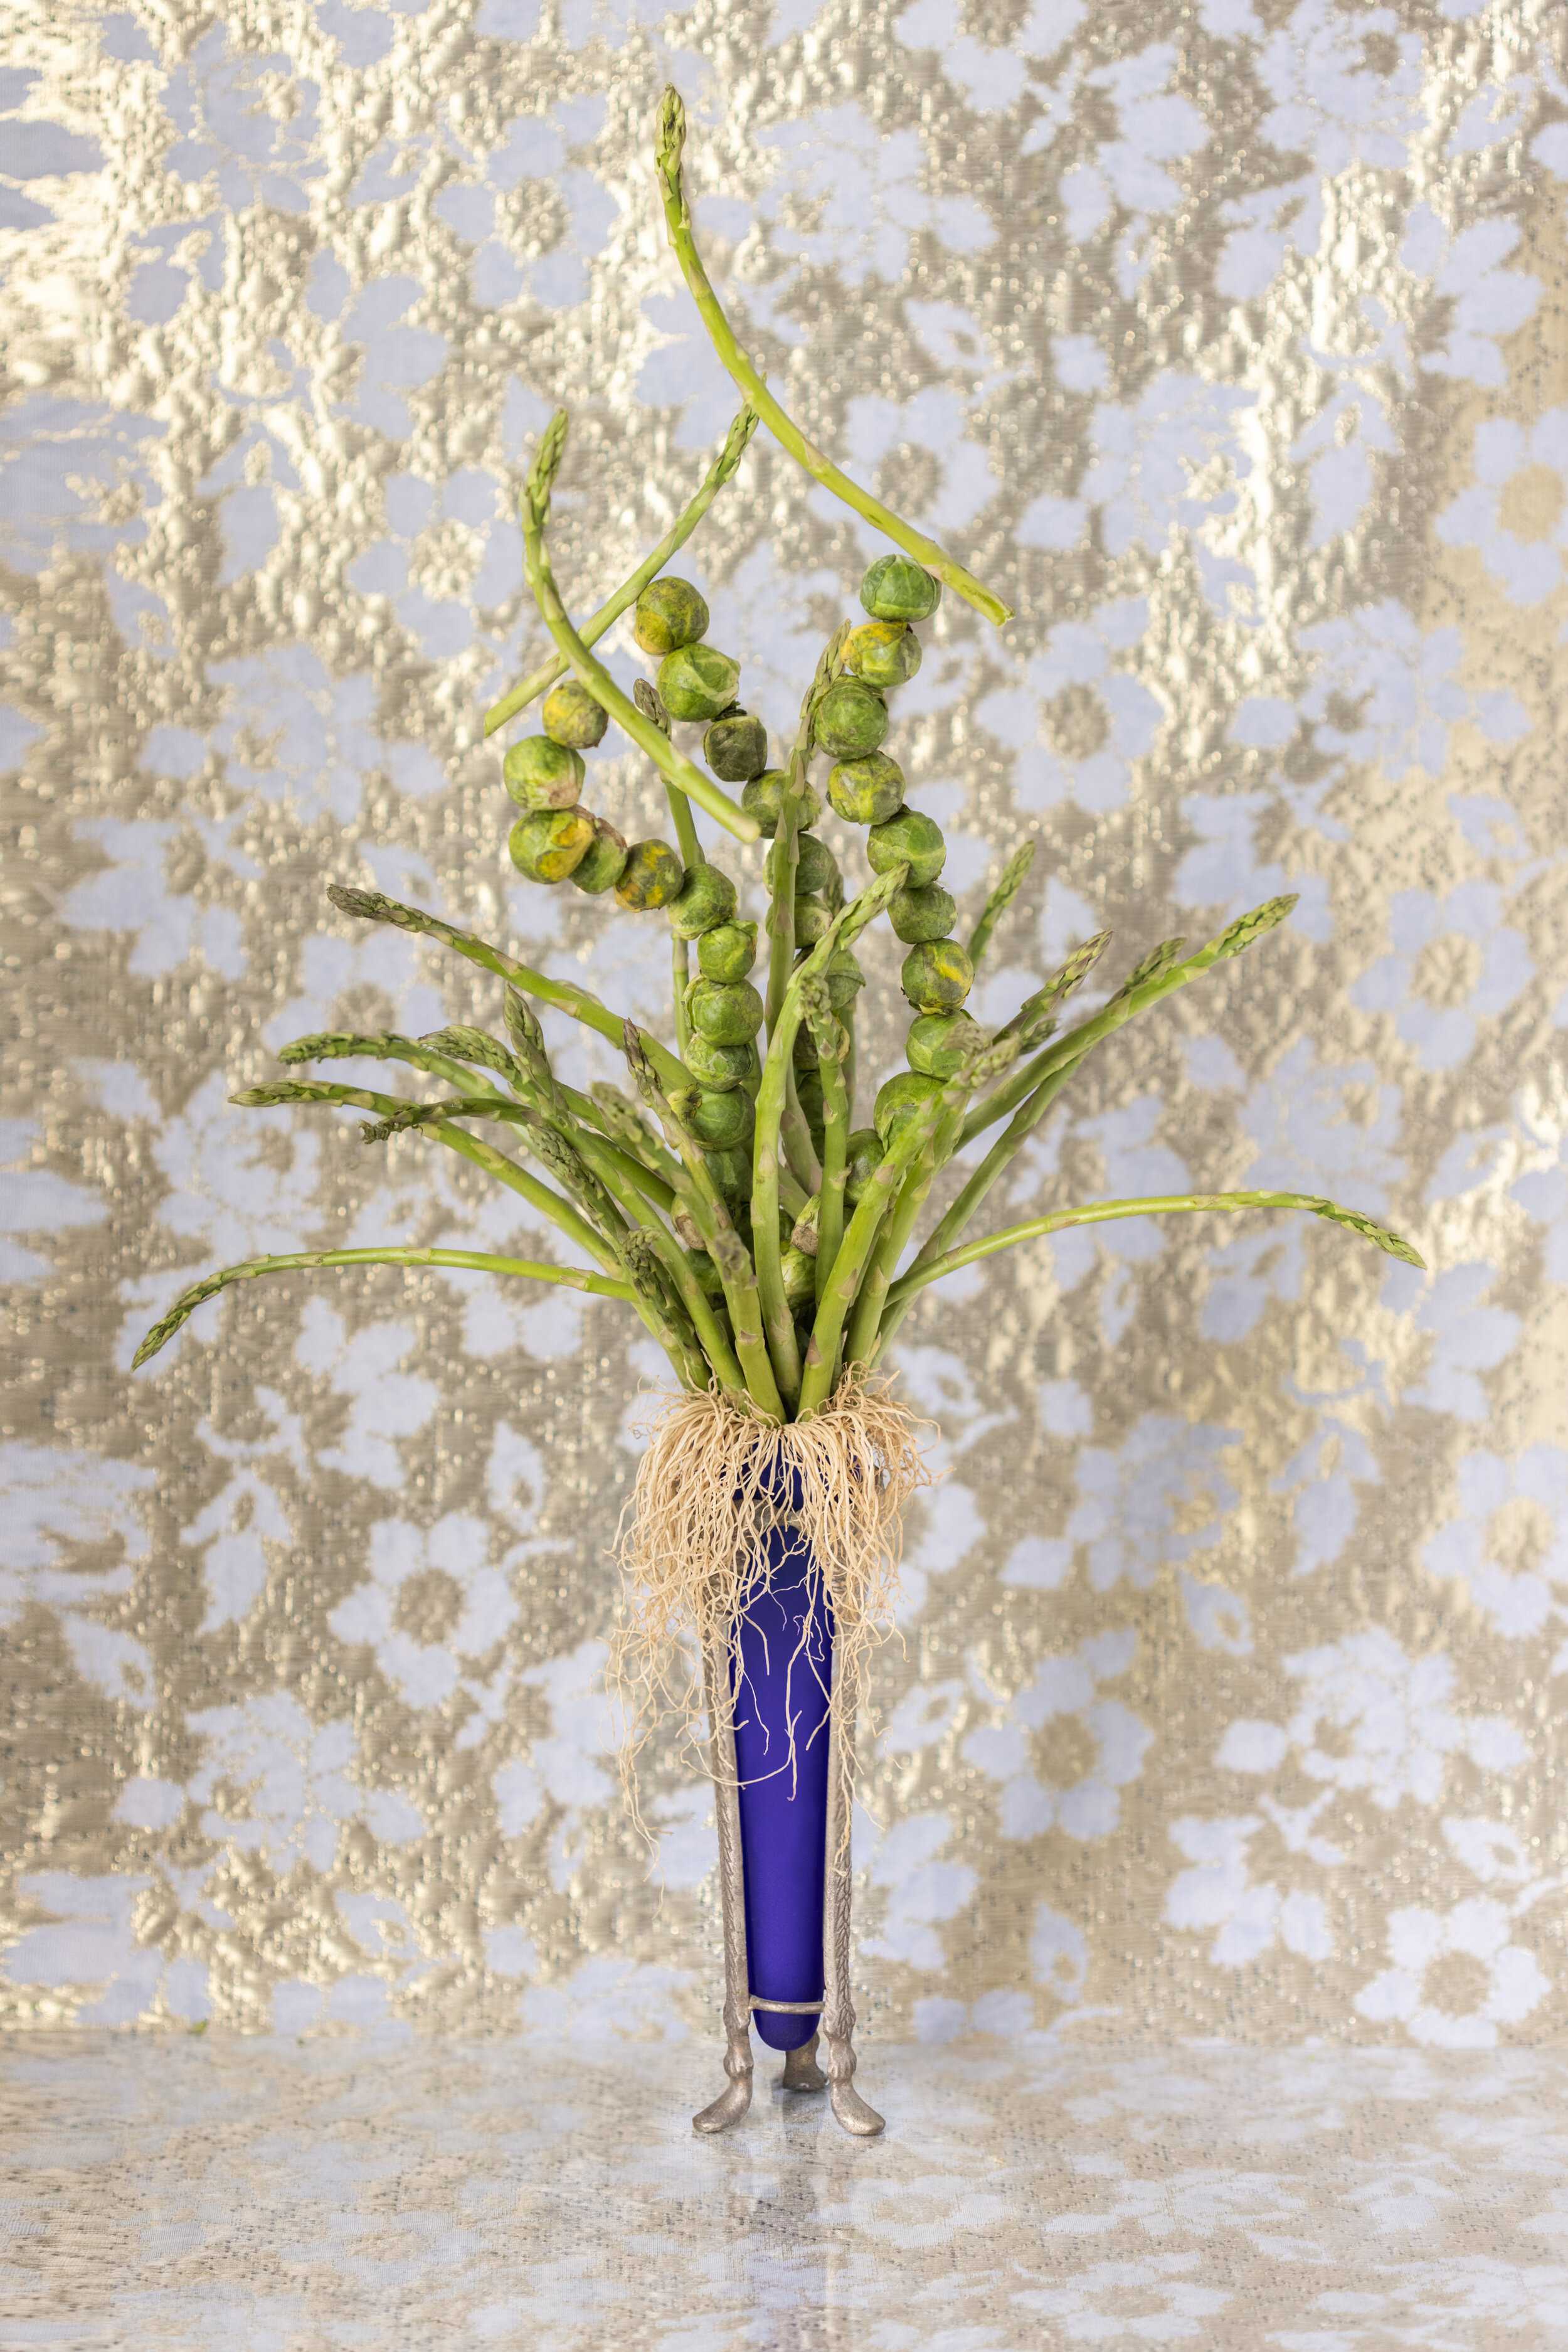 Asparagus in Bloom, 2021